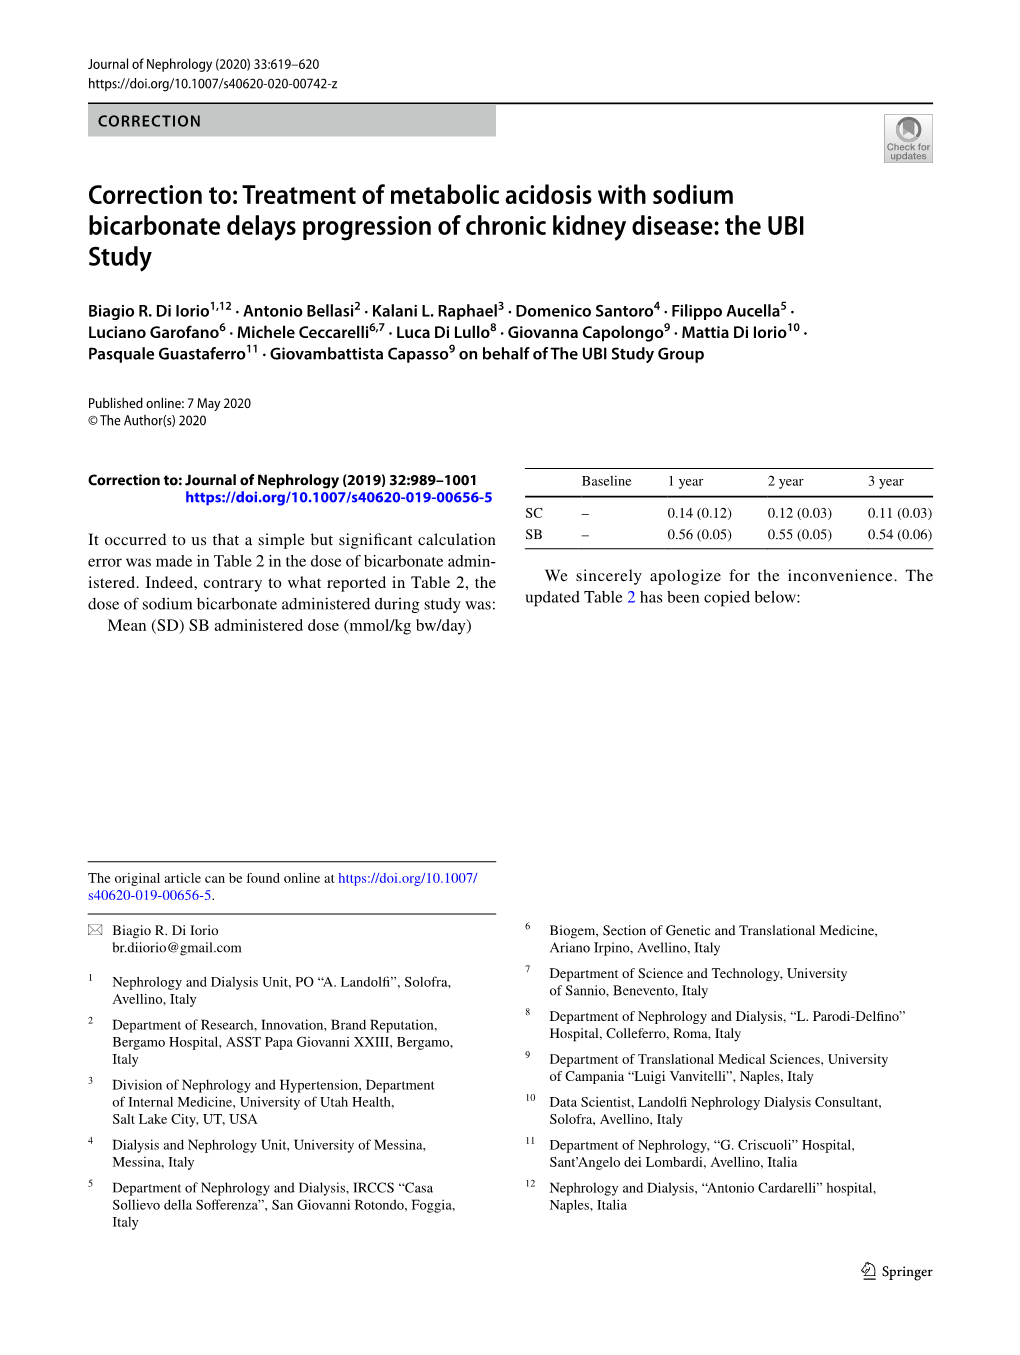 Correction To: Treatment of Metabolic Acidosis with Sodium Bicarbonate Delays Progression of Chronic Kidney Disease: the UBI Study